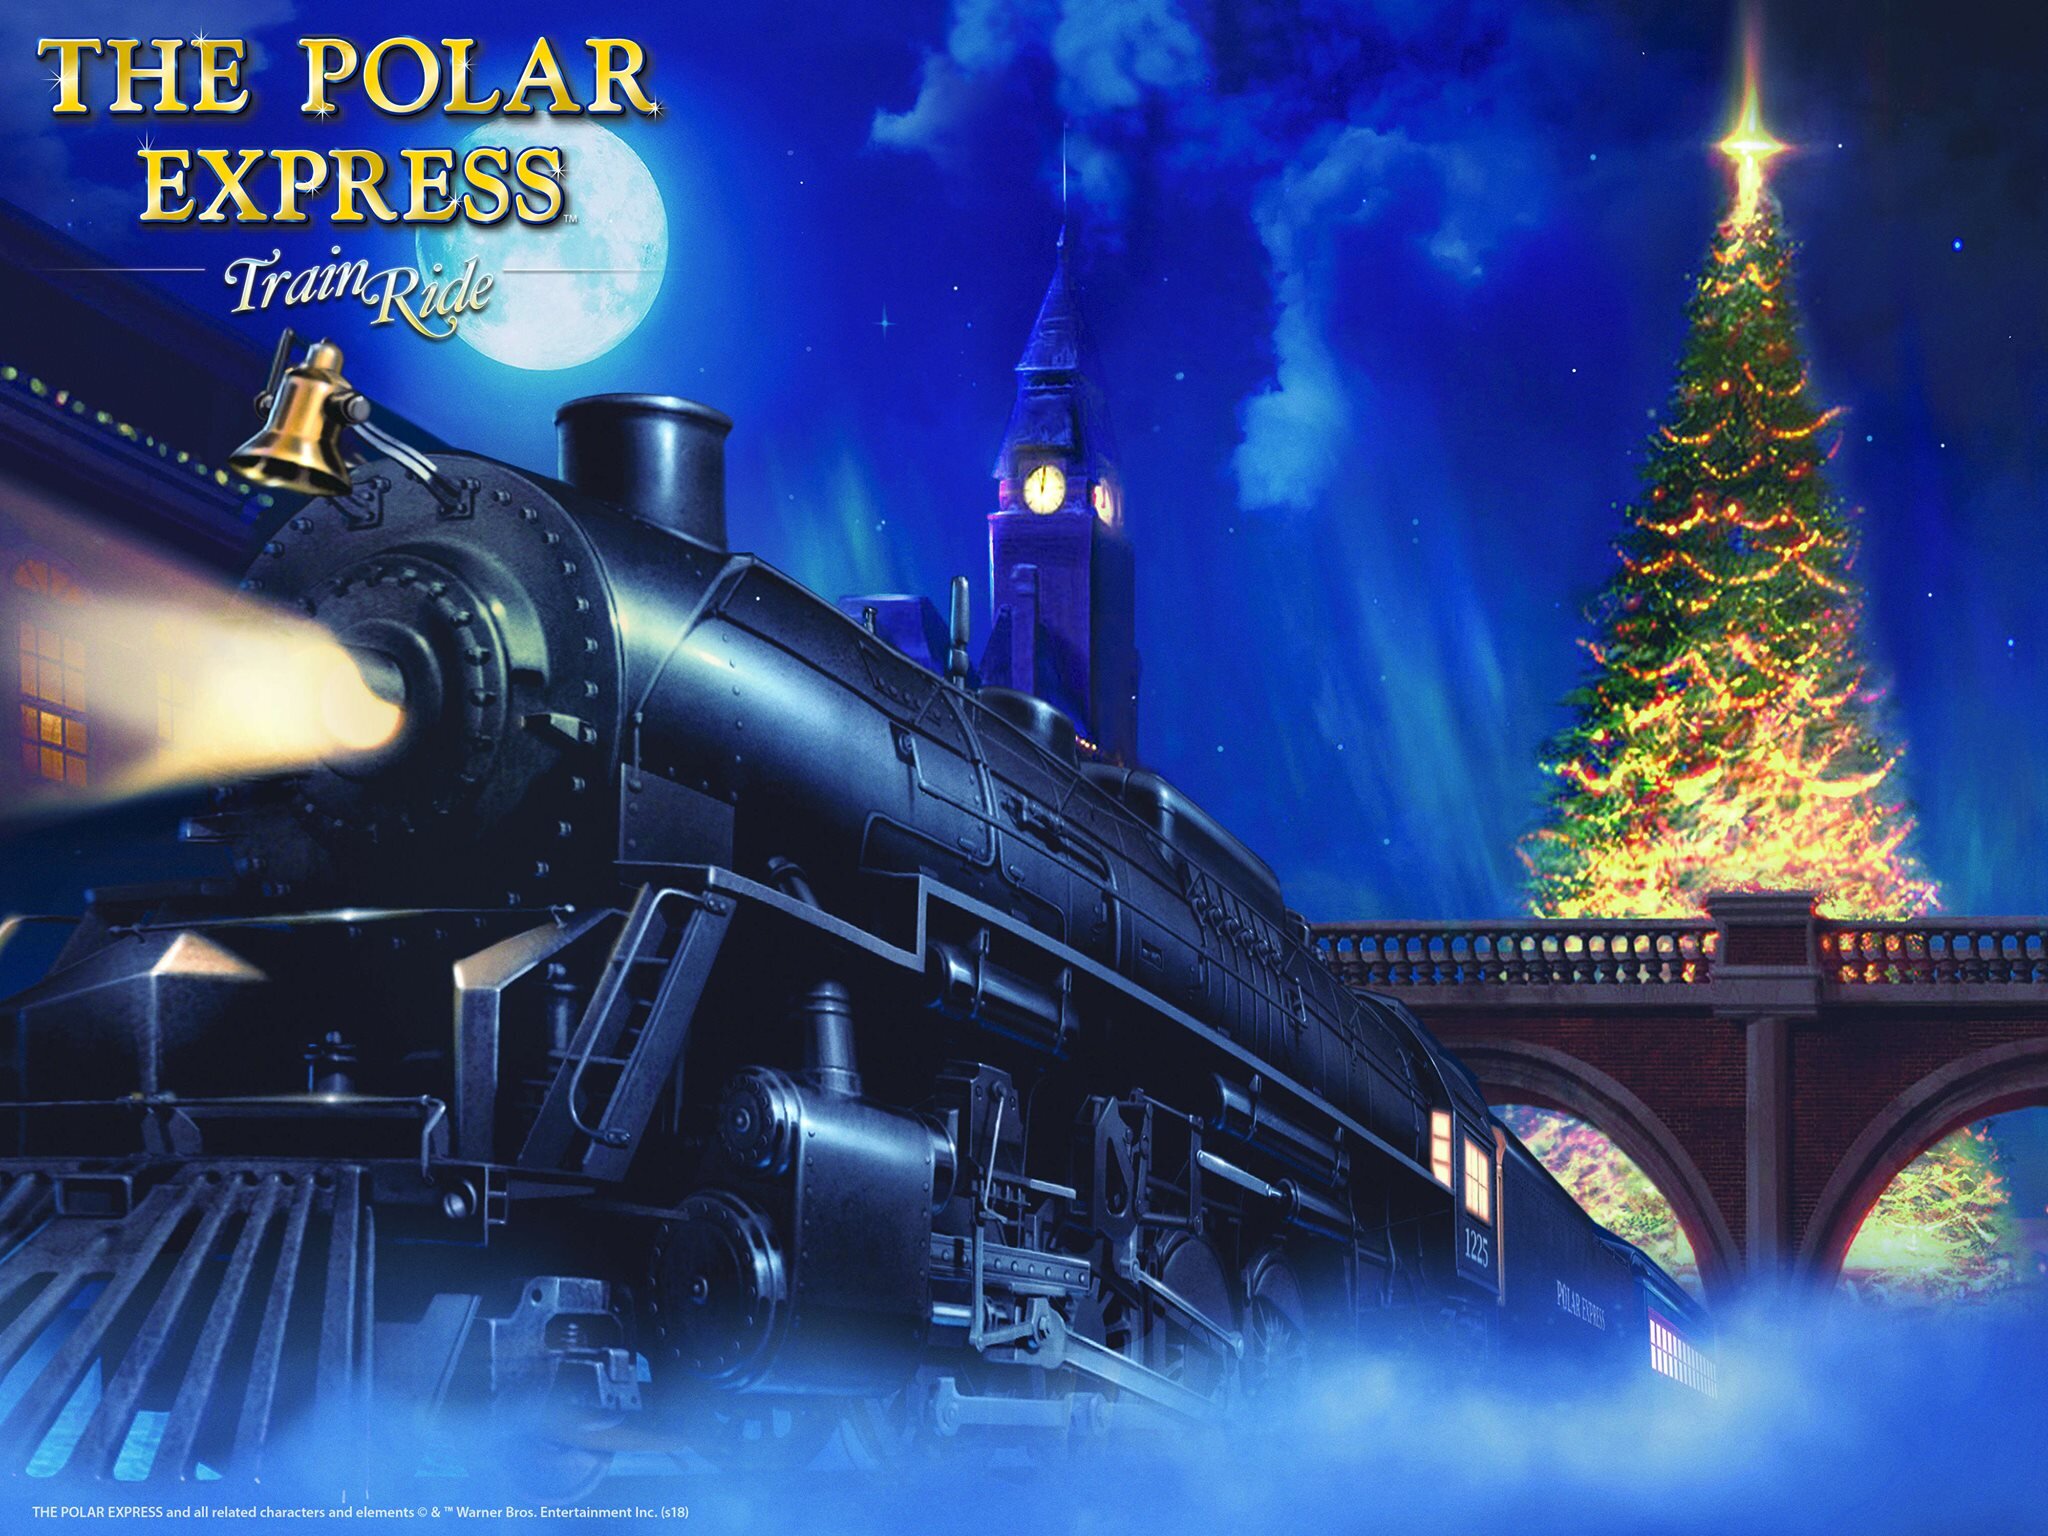 Polar Express train rides are back at Colorado Railroad Museum